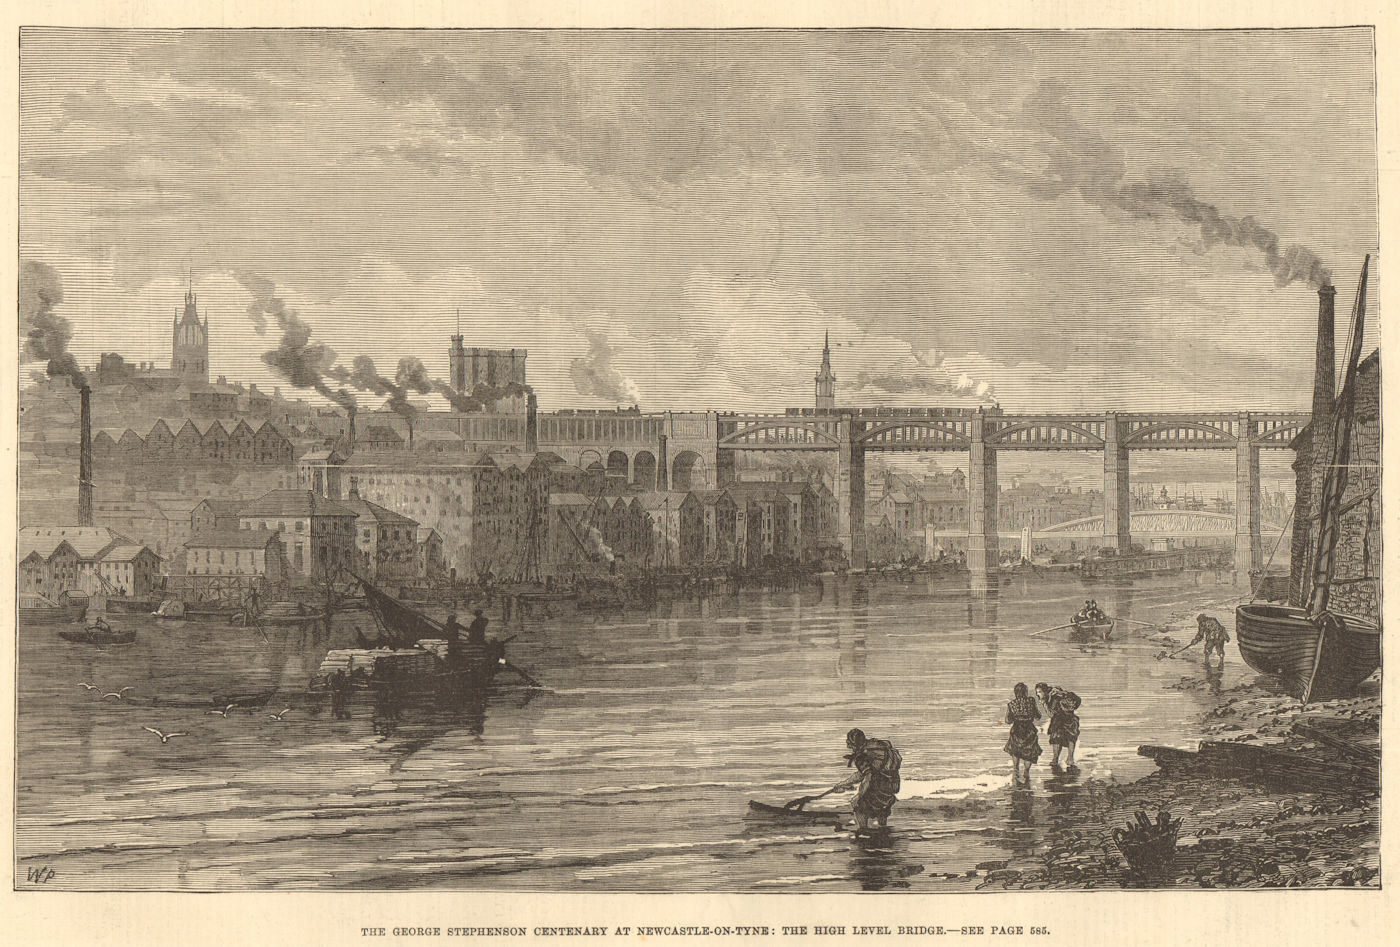 Newcastle-upon-Tyne & the High Level Bridge. George Stephenson Centenary 1881